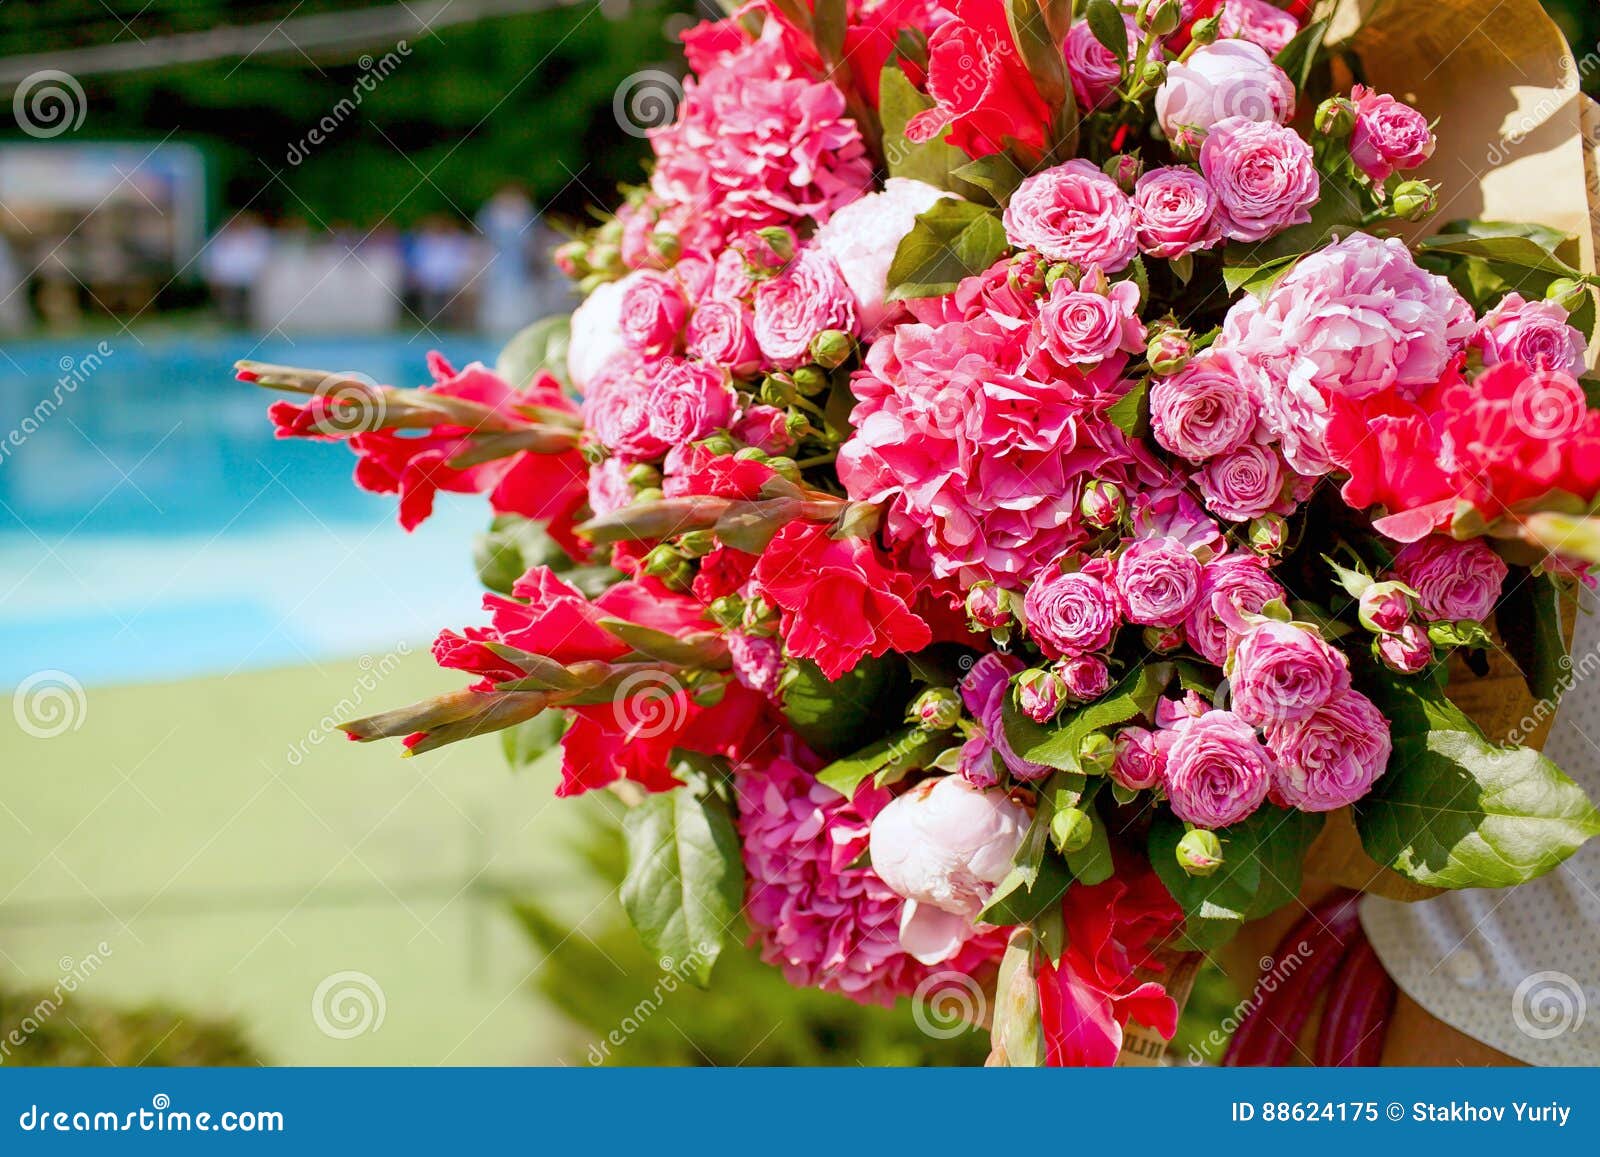 Wedding Decorating Bouquet Of Roses And Peons Closeup Stock Image